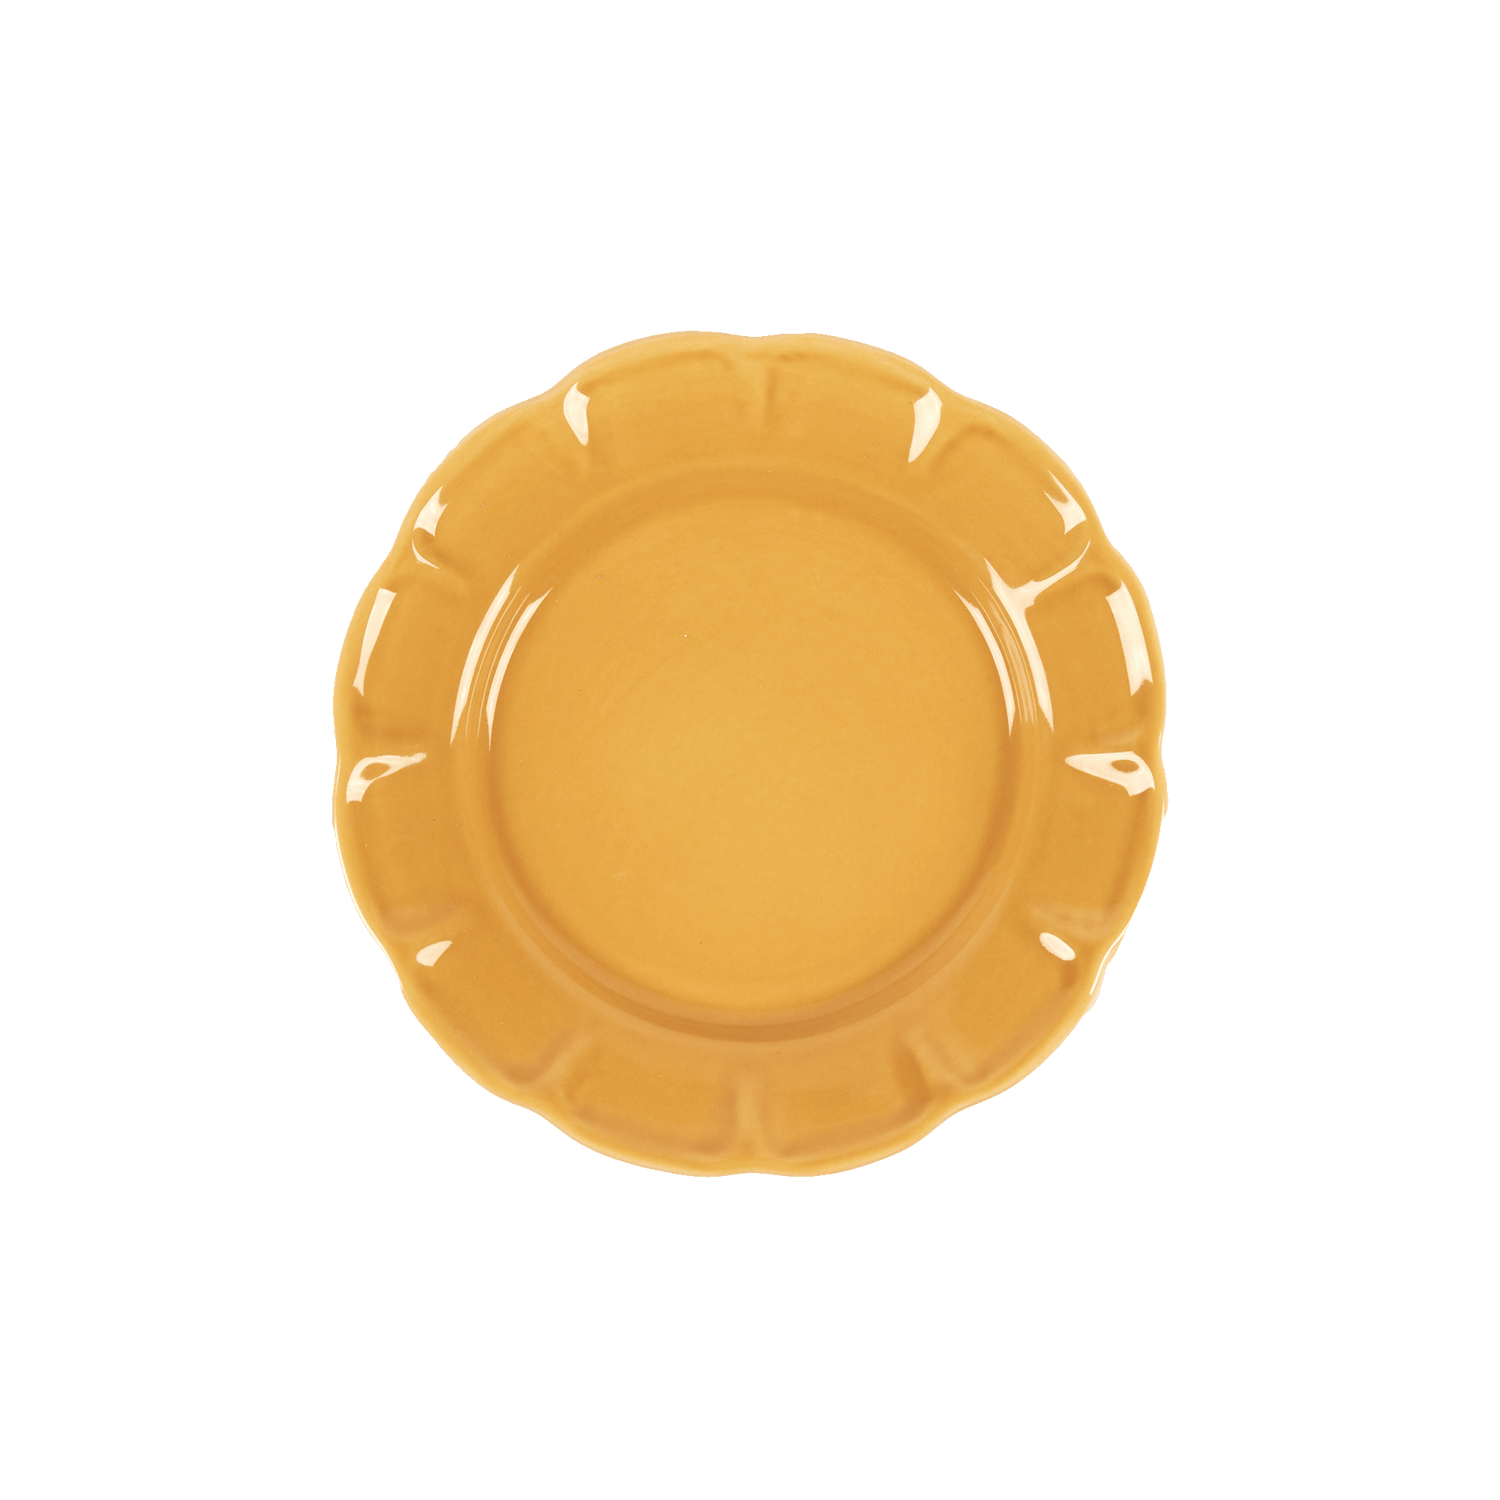 Everyday charm salad plate - Yellow 21 cm